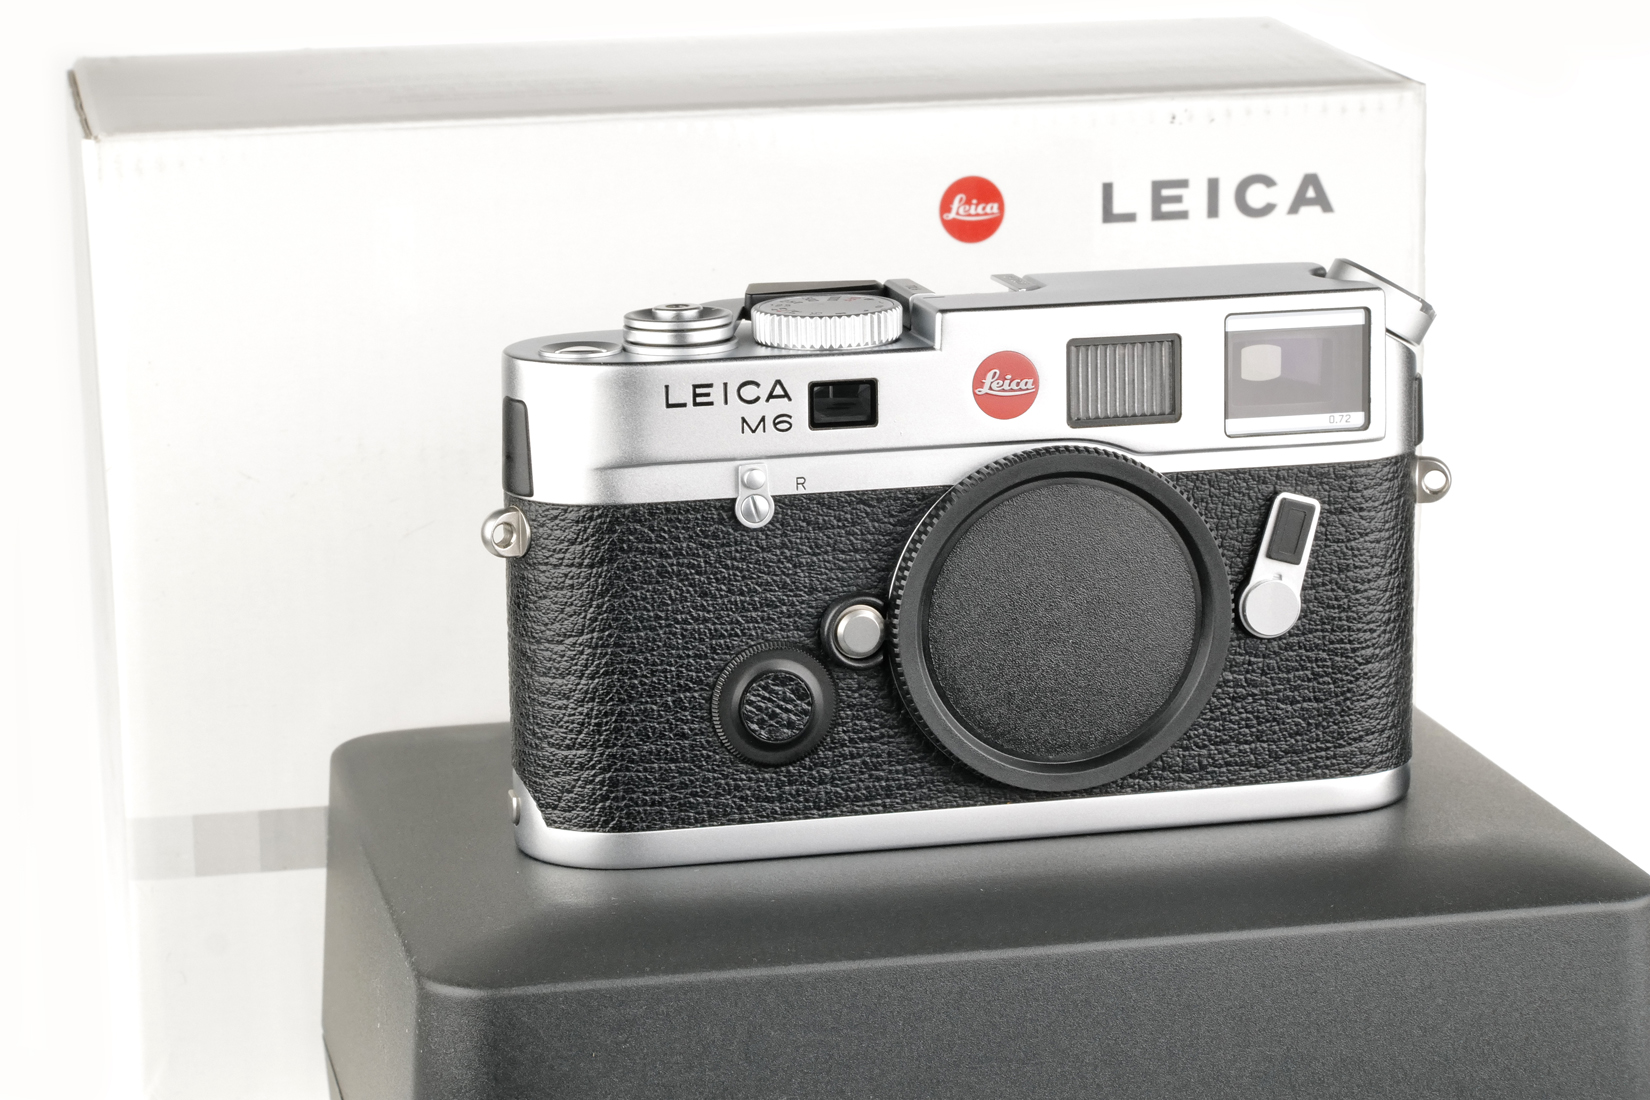 Leica M6, silver chrome finish, 10466